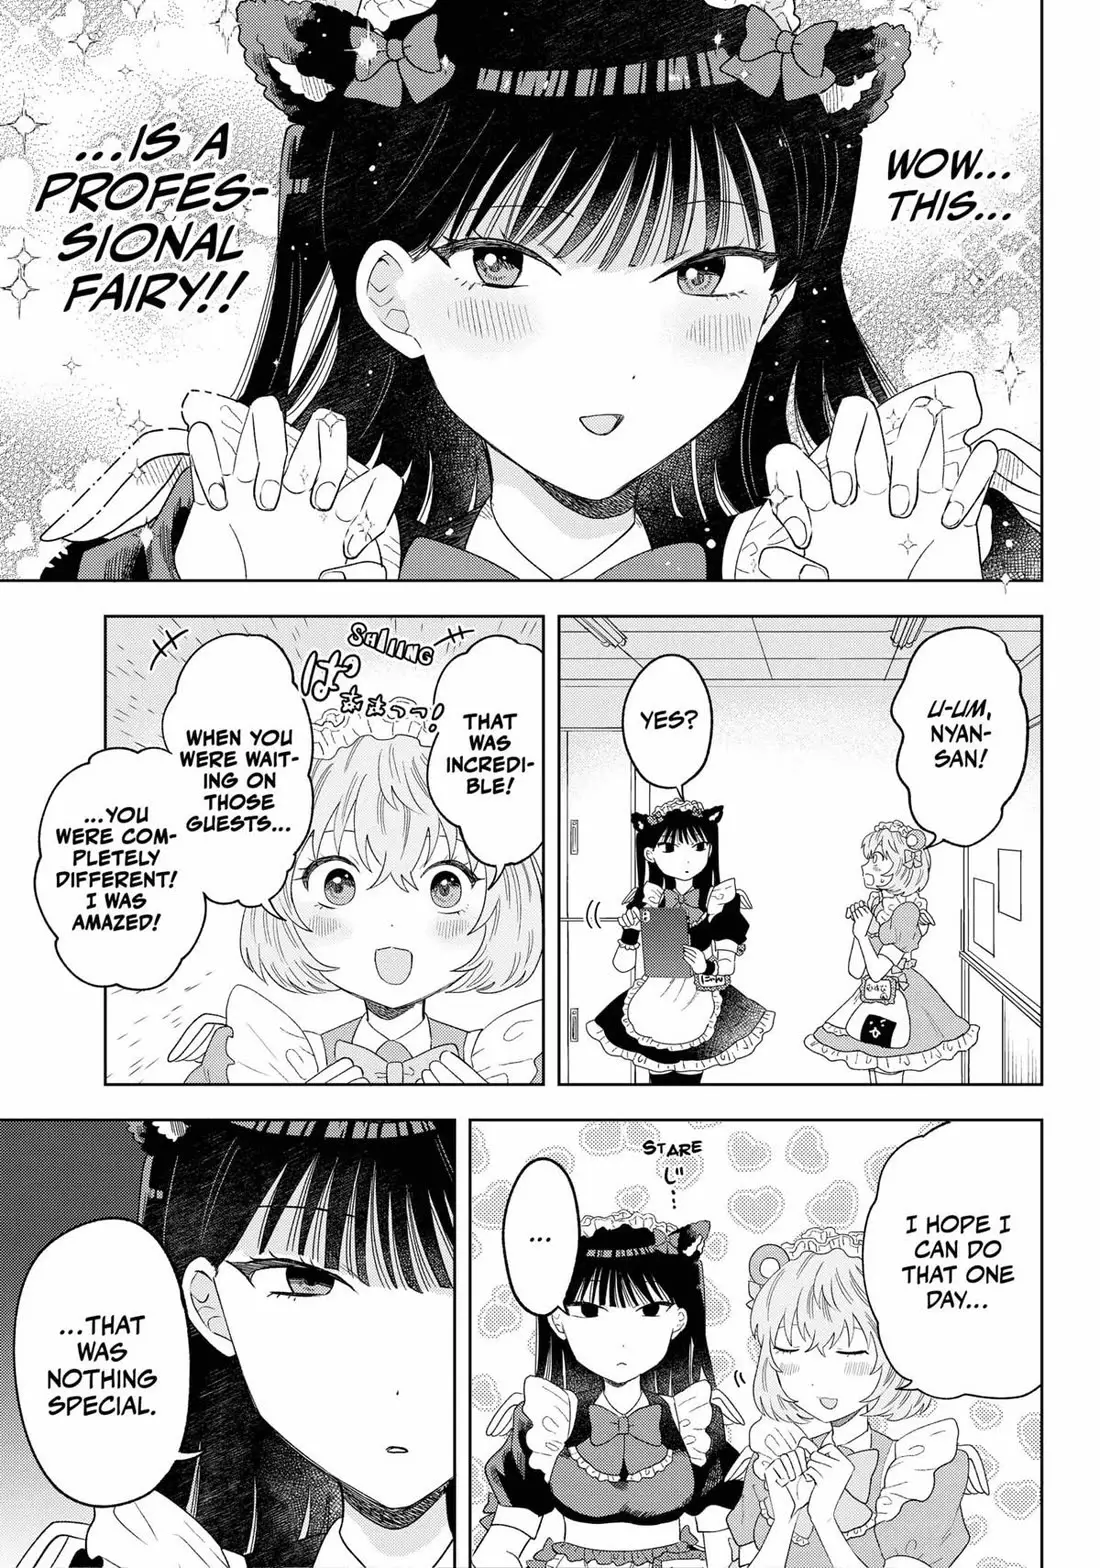 Tsuruko Returns The Favor - 16 page 7-0451b69f